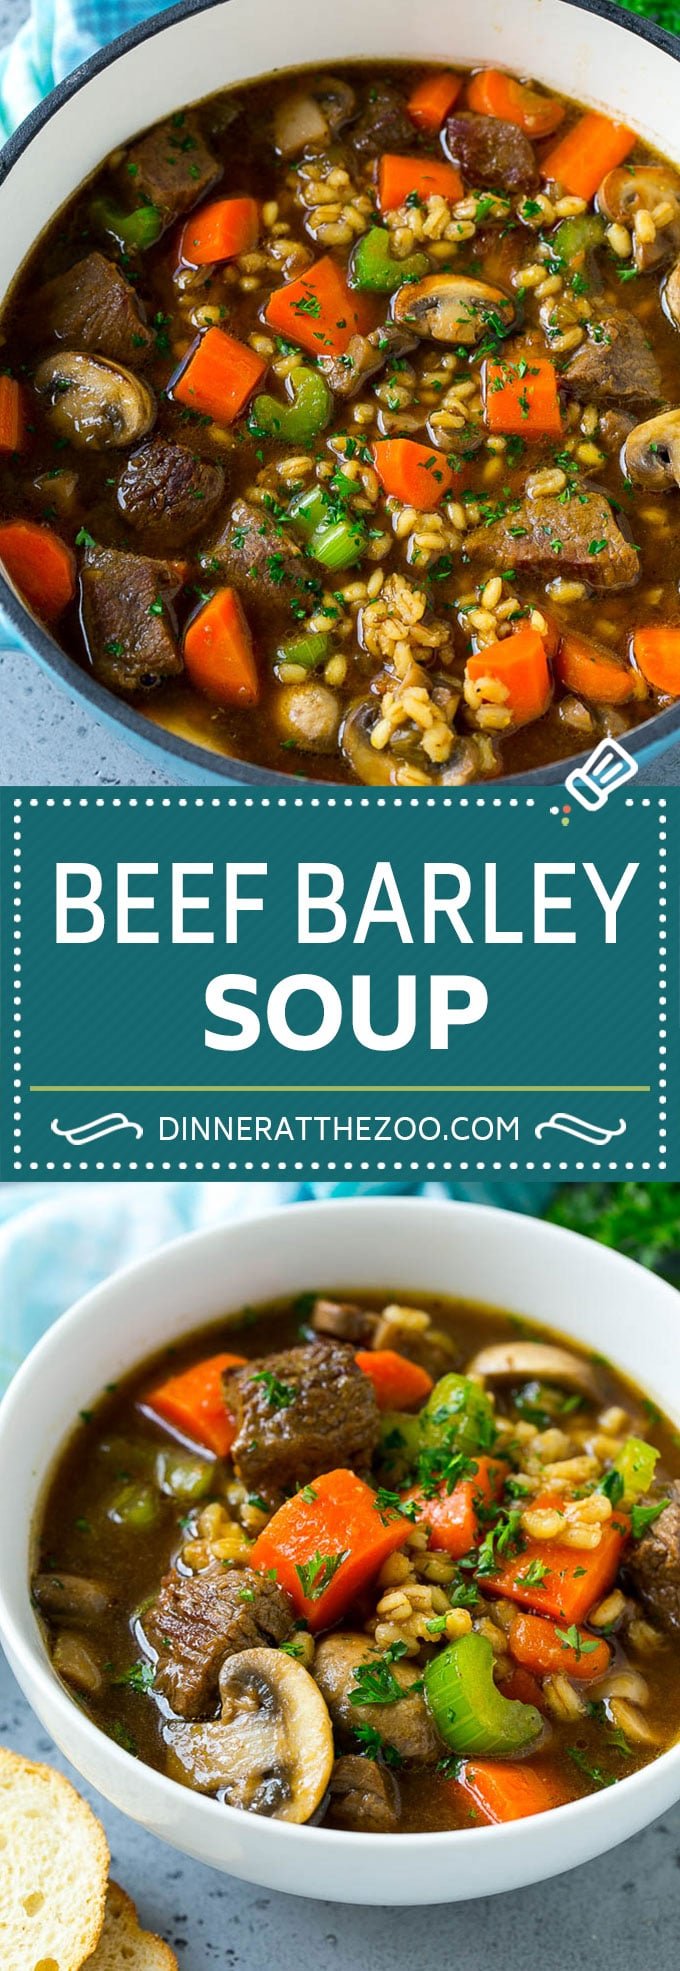 Beef Barley Soup Recipe | Beef Soup | Barley Soup #soup #beef #dinner #vegetables #dinneratthezoo #comfortfood